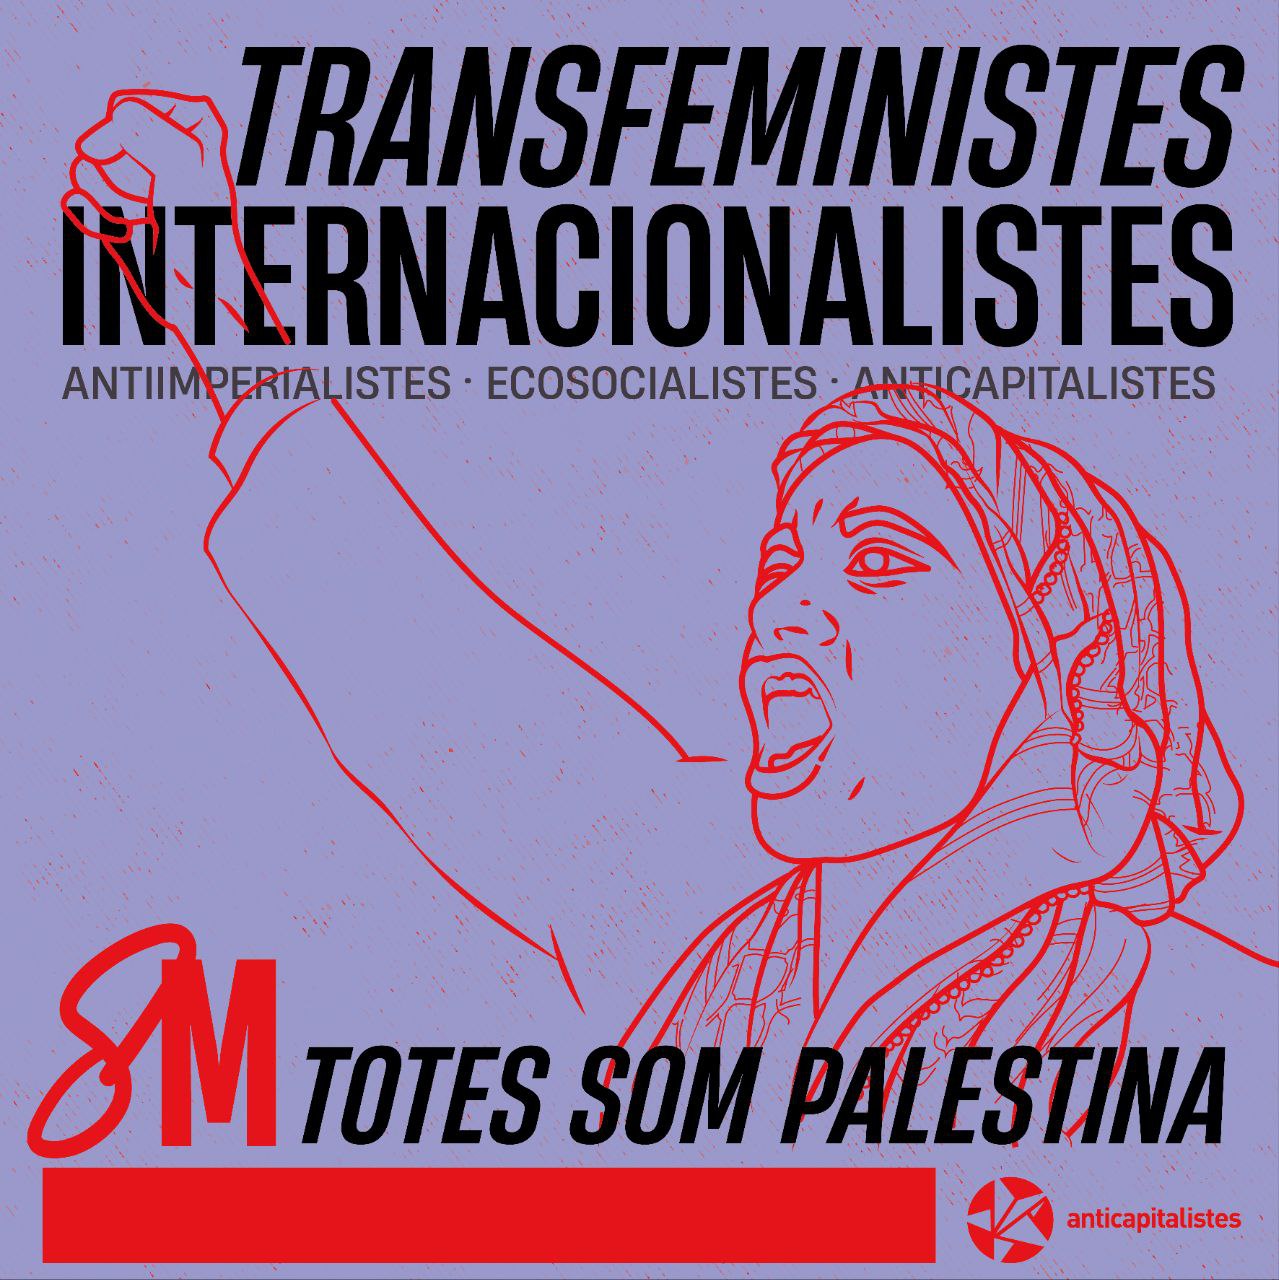 Transfeministes internacionalistes, antiimperialistes, ecosocialistes, anticapitalistes. Totis som Palestina.